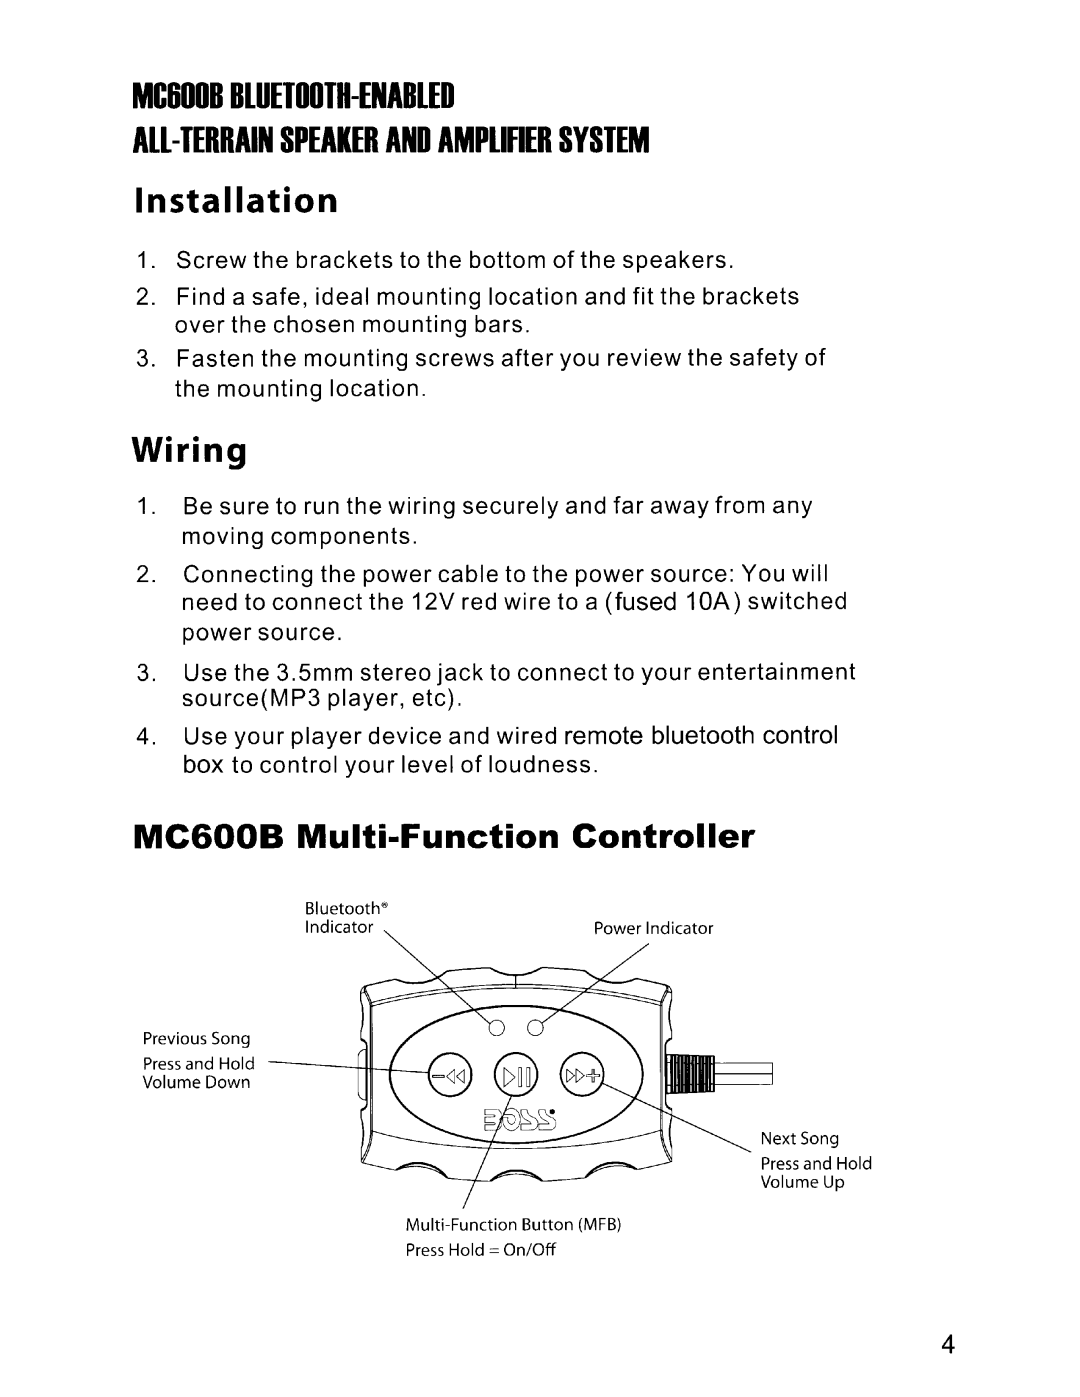 Boss Audio Systems user manual MC6DOB BLUETDDTH-ENABLED, Installation, Wiring, MC600B Multi-FunctionController 